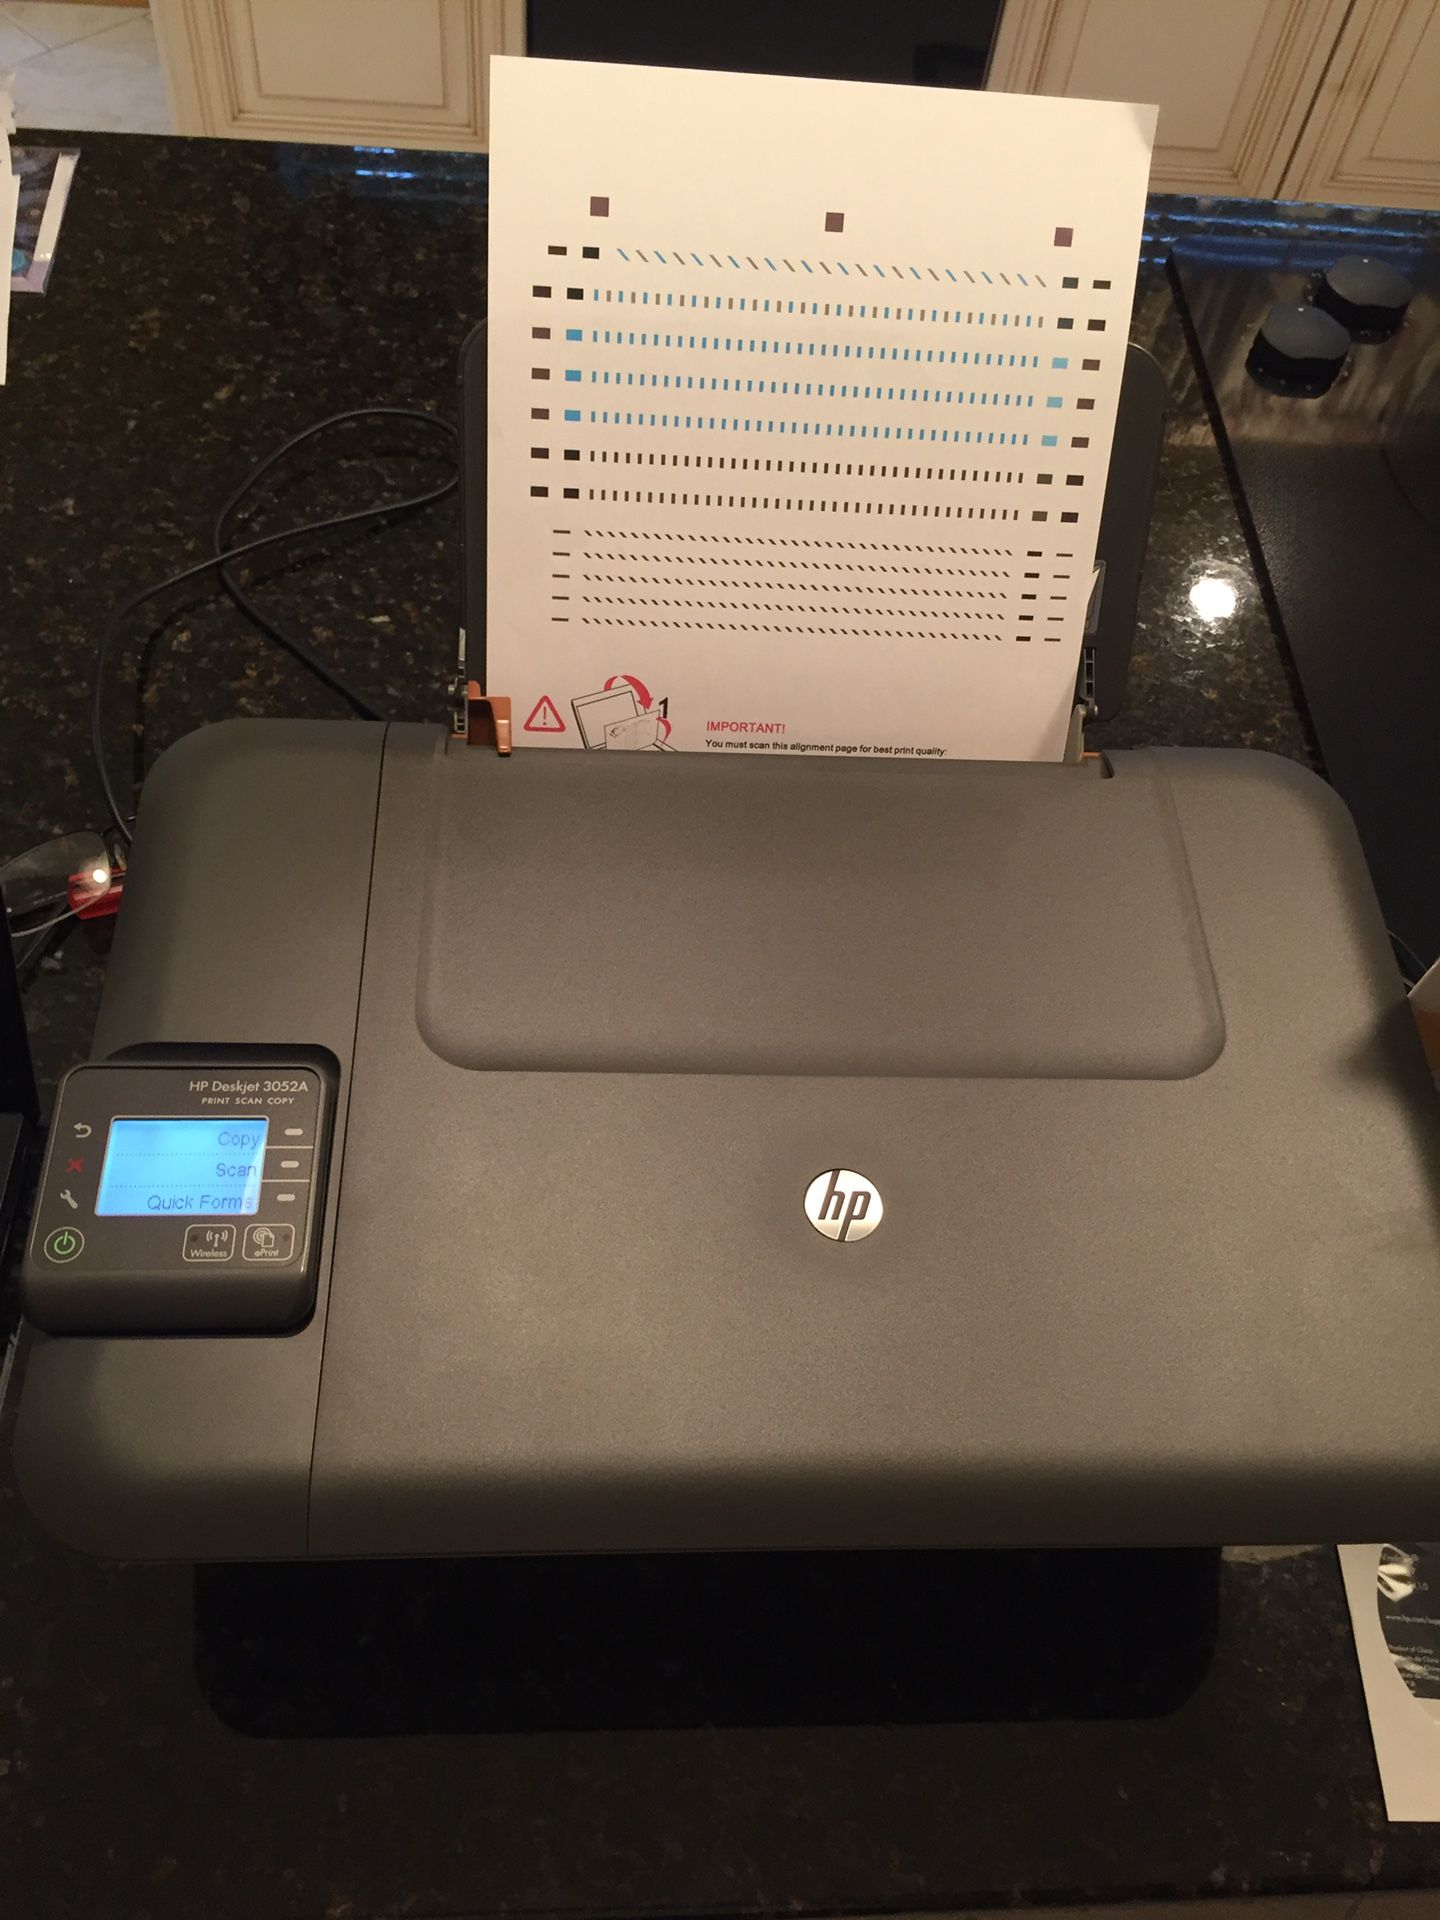 HP Printer/Copier Scanner